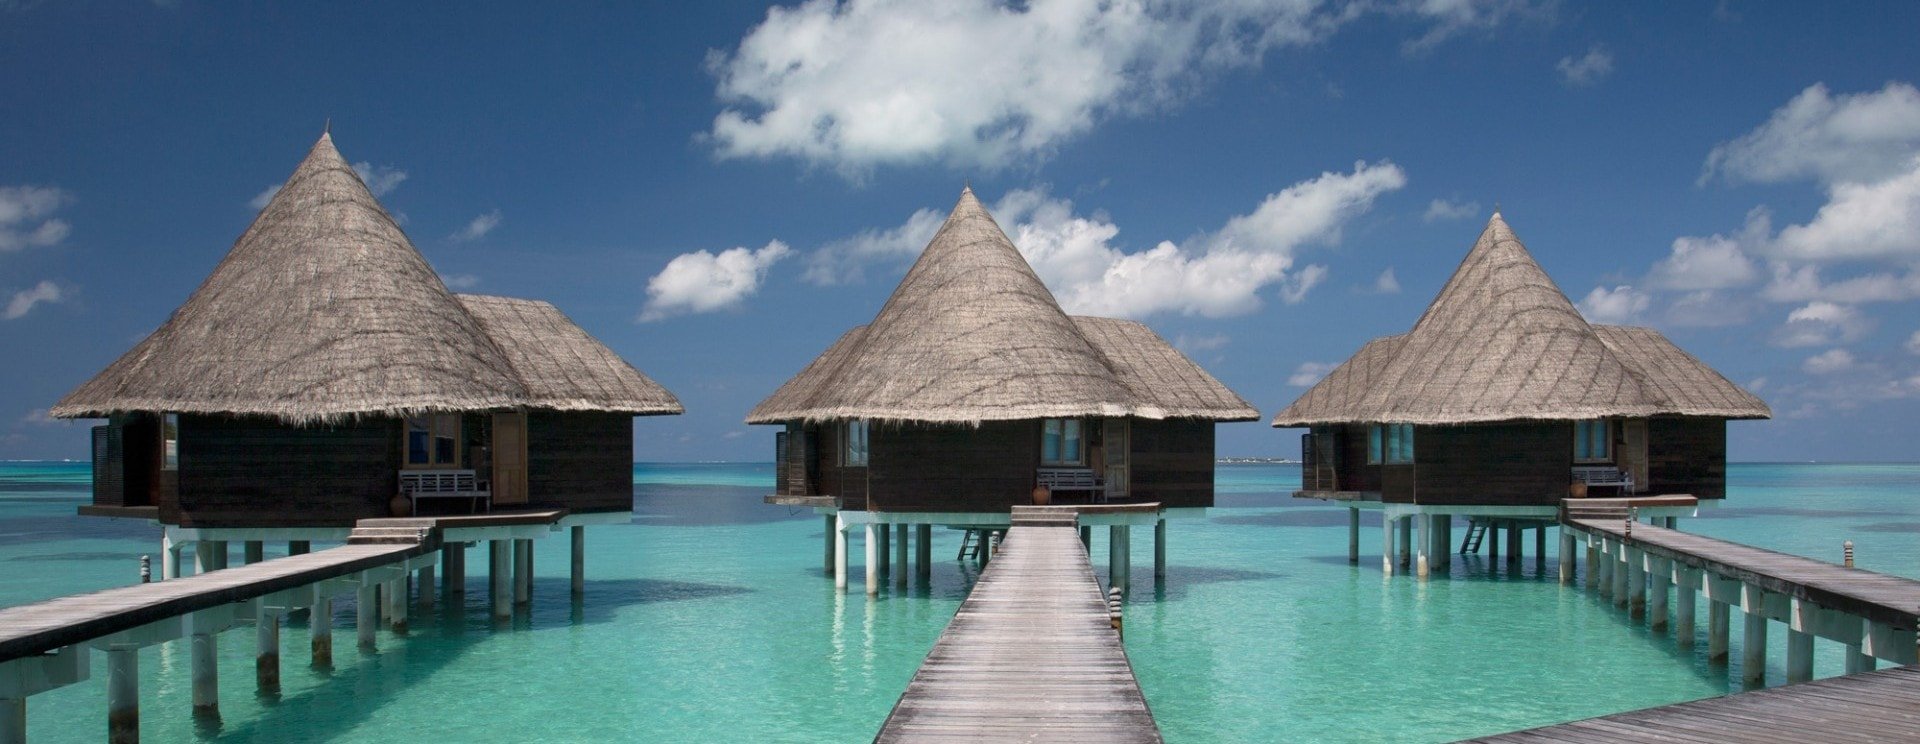 resort-maldive-coco-palm-dhuni-kolhu-lagoon-villa-paths.jpg